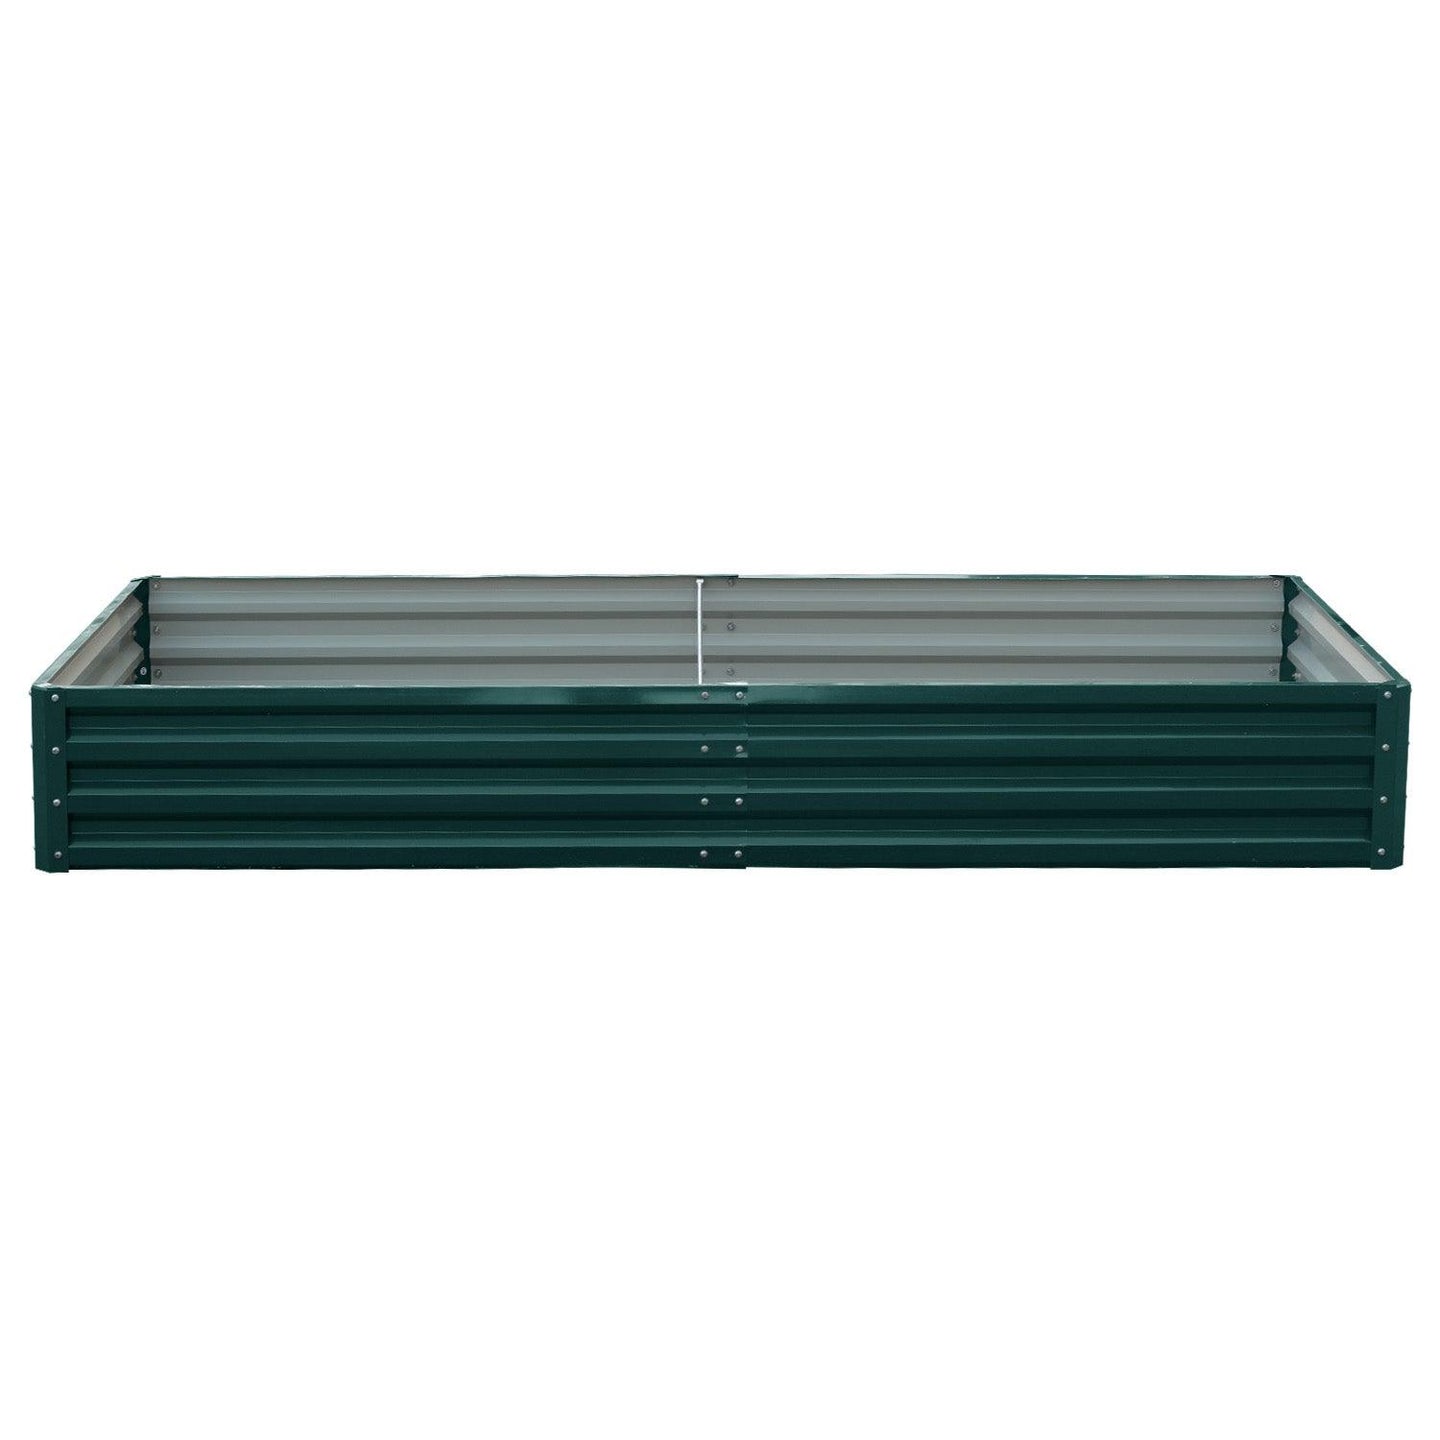 Buy Wallaroo Garden Bed 240 x 120 x 30cm Galvanized Steel - Green discounted | Products On Sale Australia